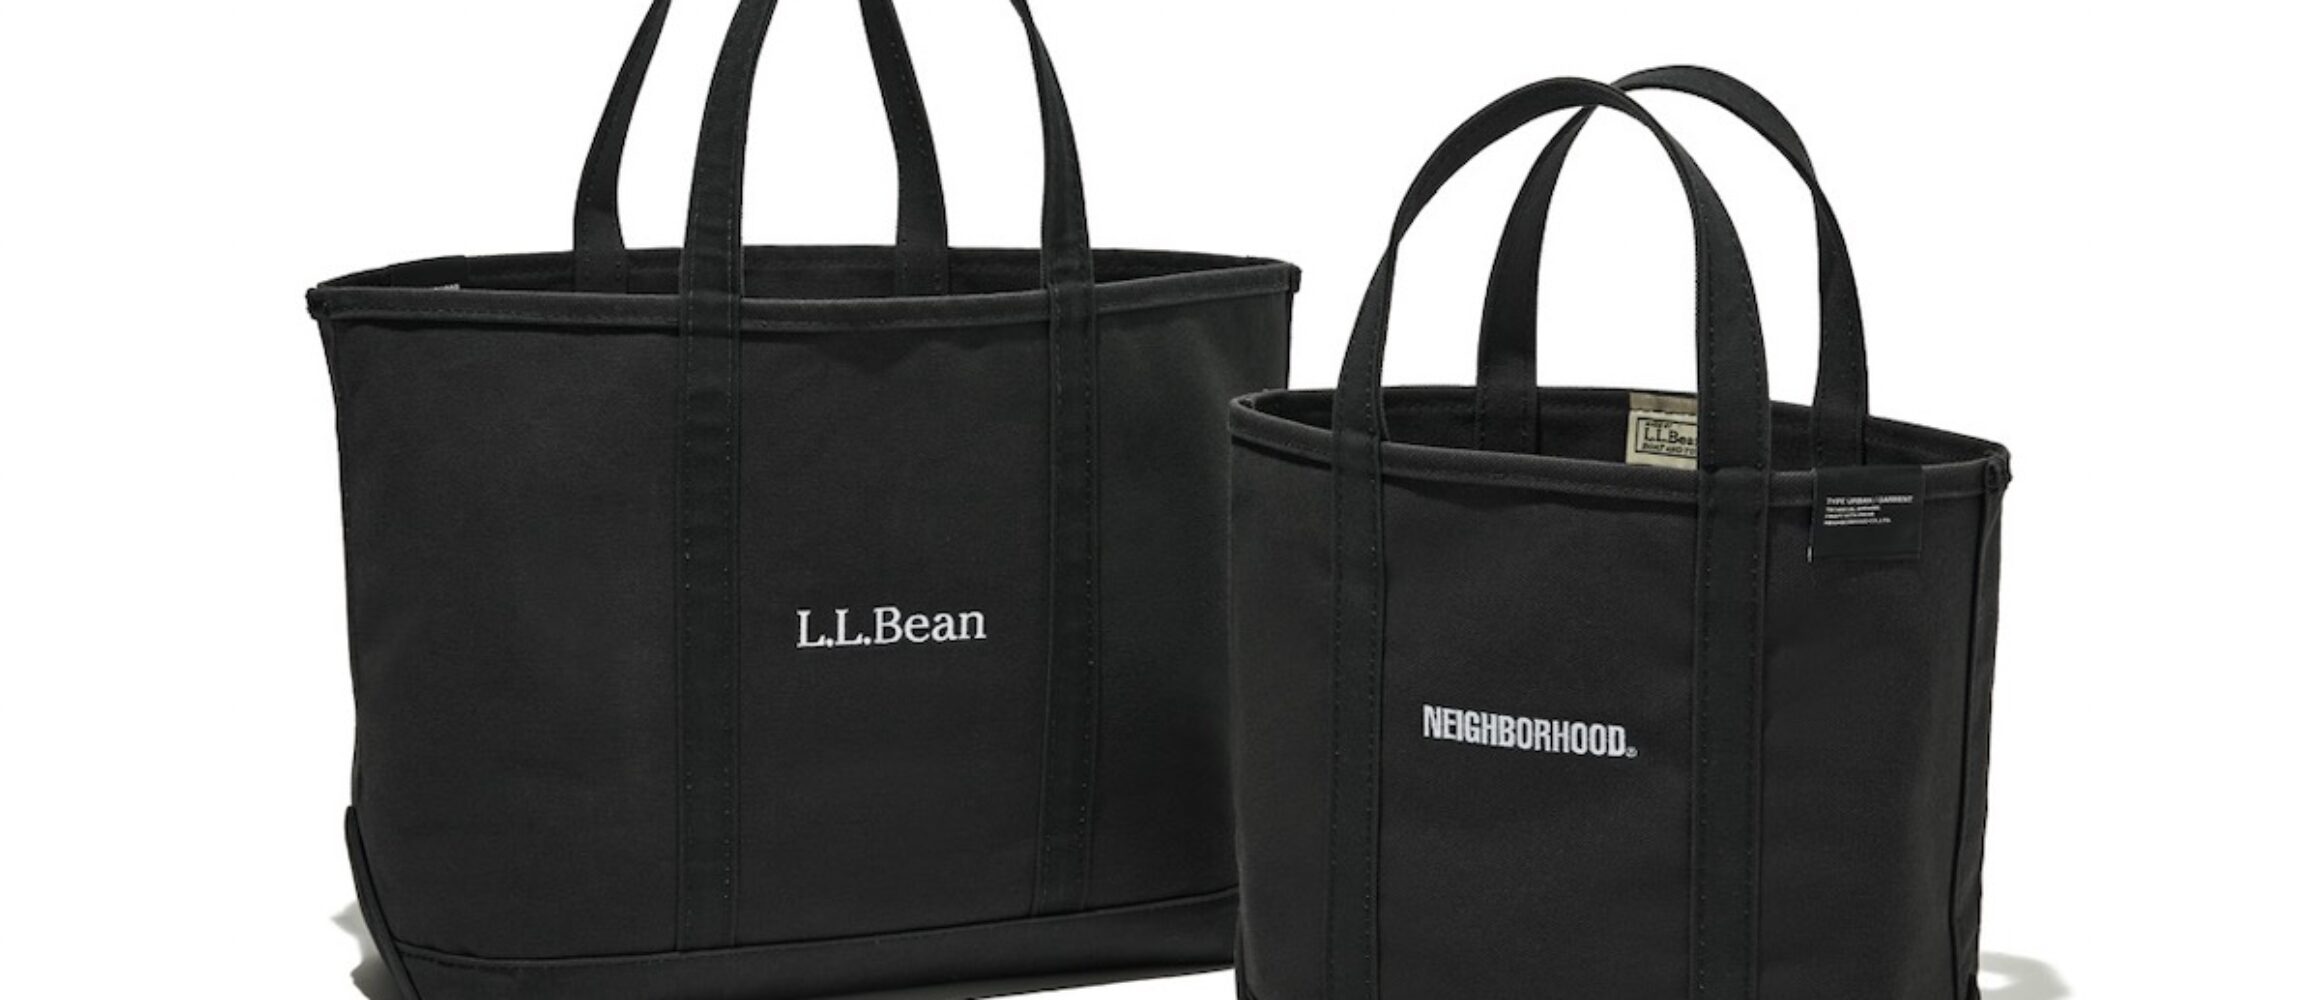 NEIGHBORHOOD L.L.Bean . Black Tote-Mサイズ